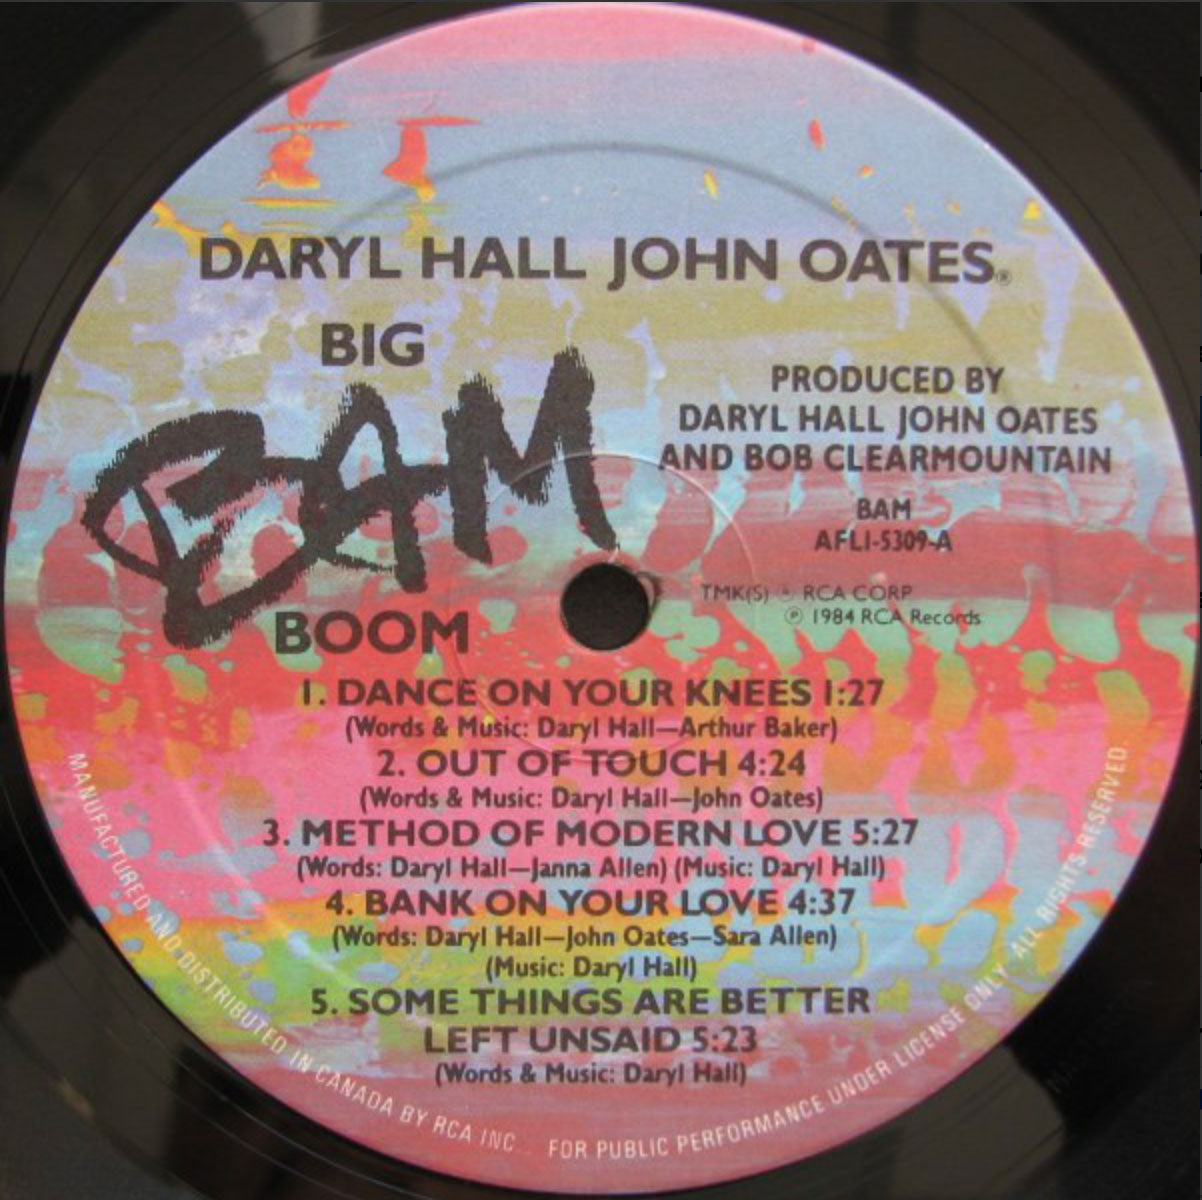 Daryl Hall and John Oates - Big Bam Boom - 1984